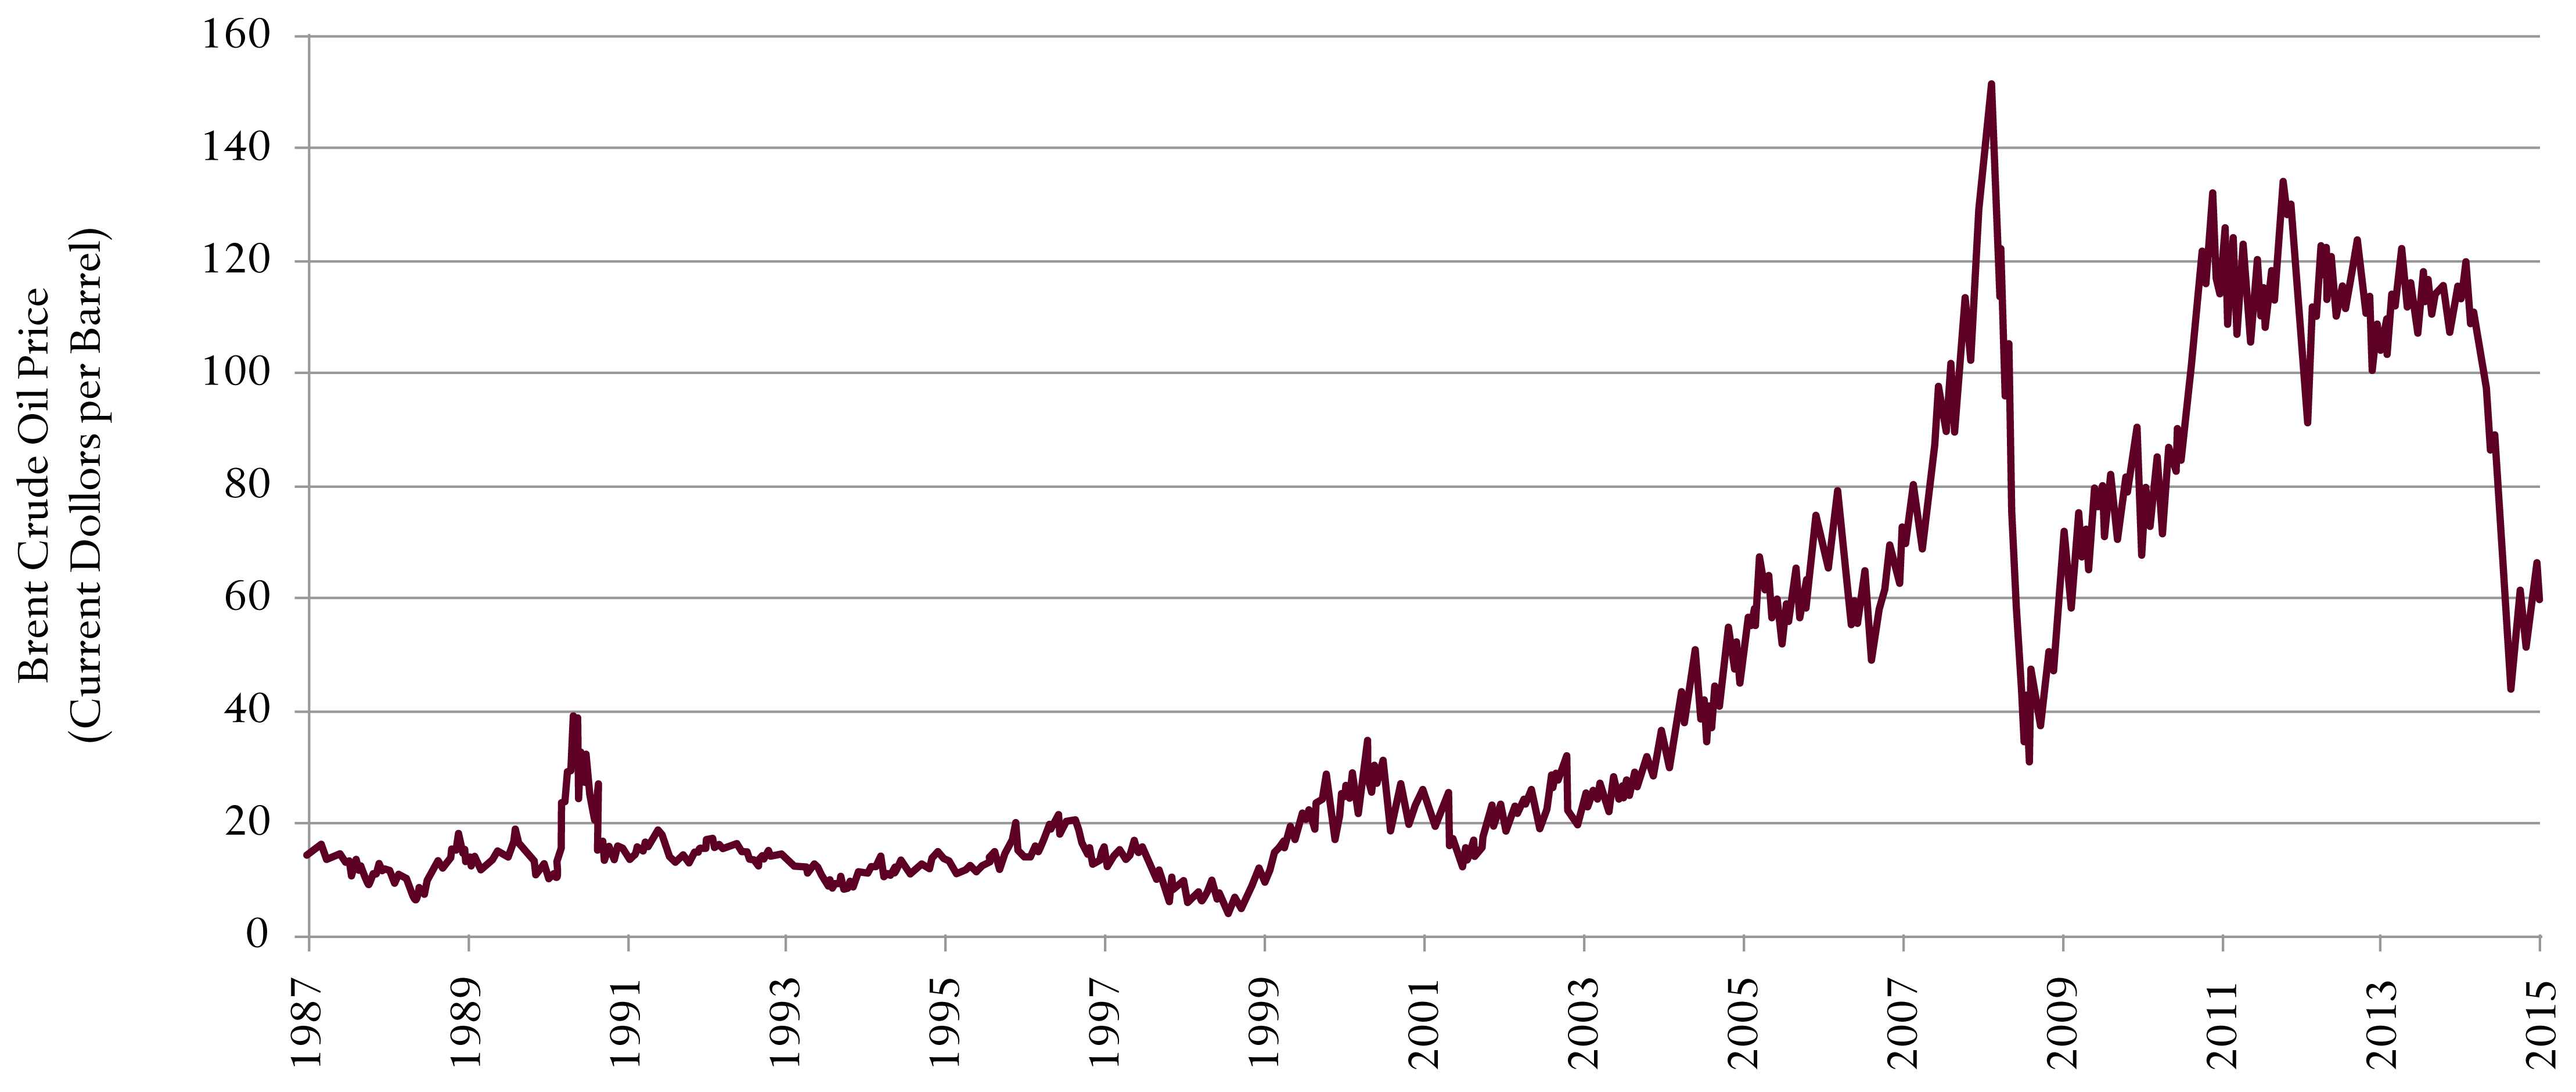 Oil Price Chart 2001